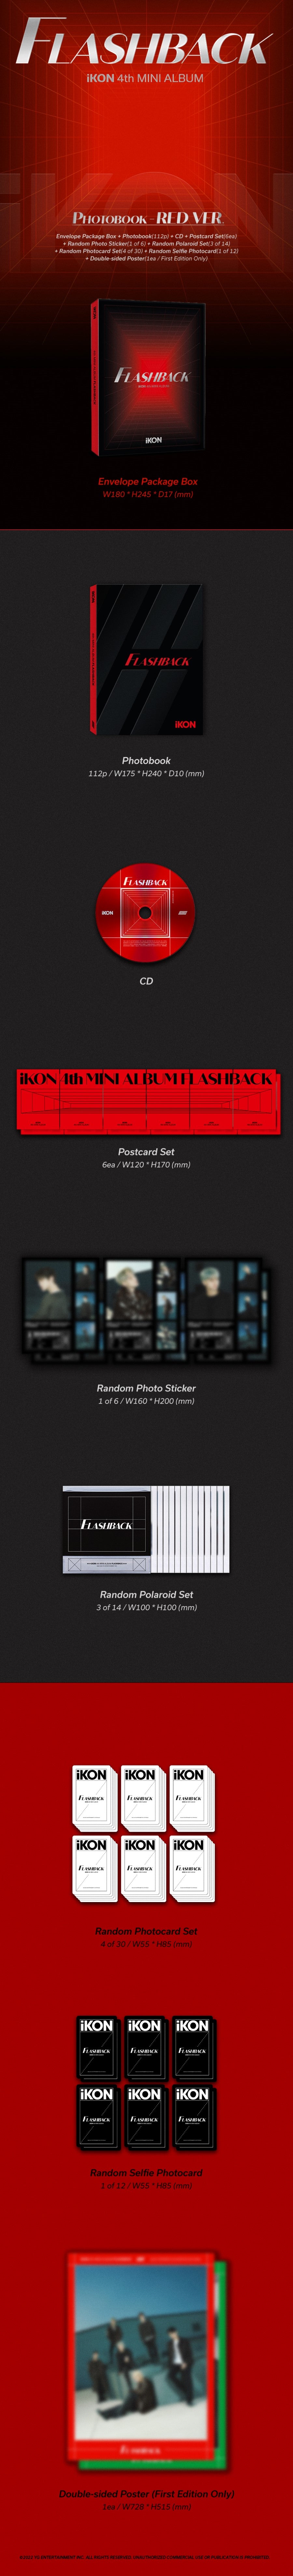 iKON Mini Album Vol. 4 - FLASHBACK (Photobook Version)